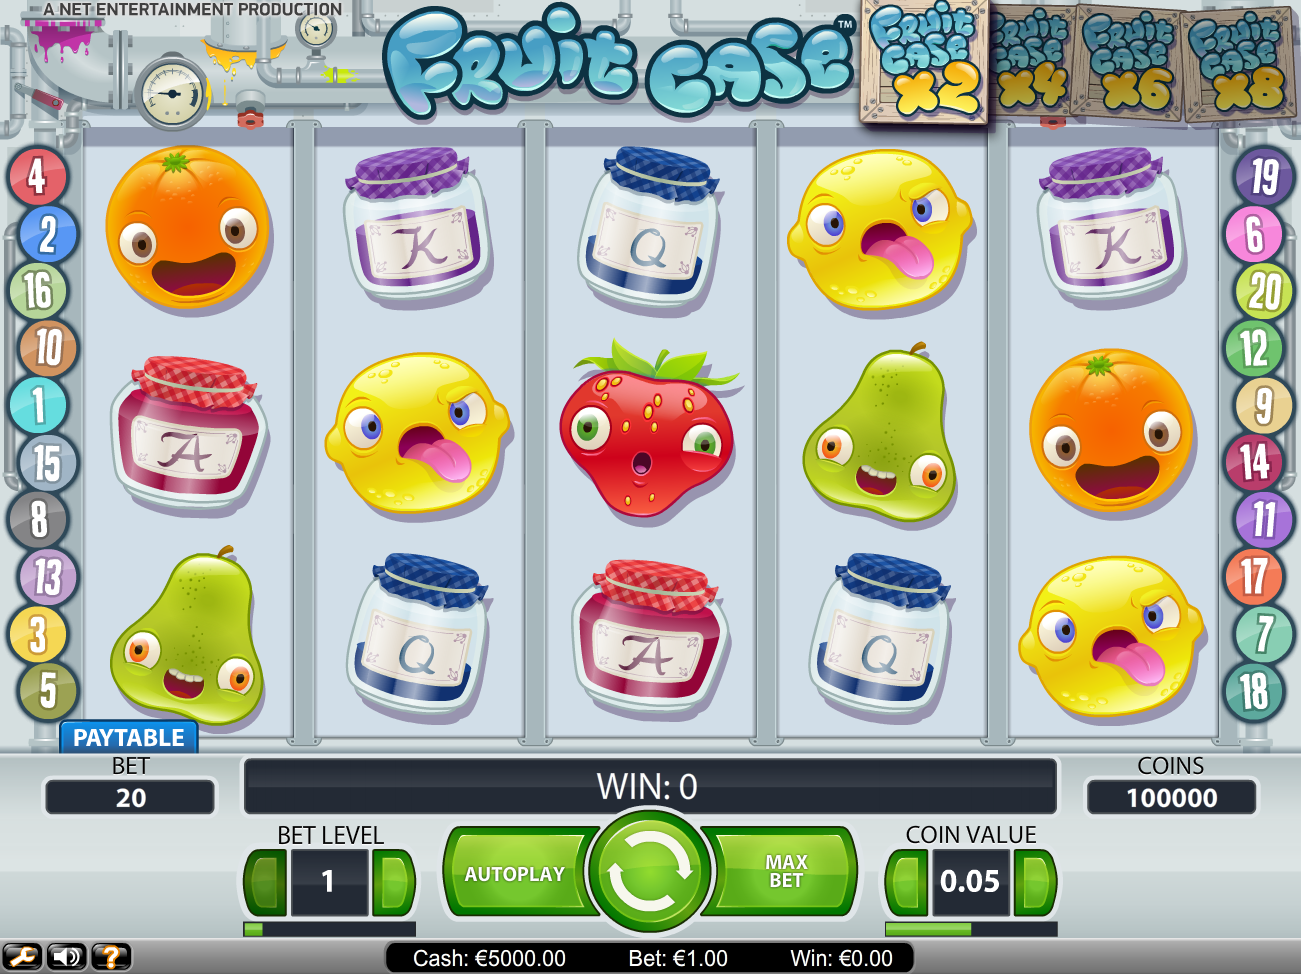 Fruit Case (Fruit Case) from category Slots